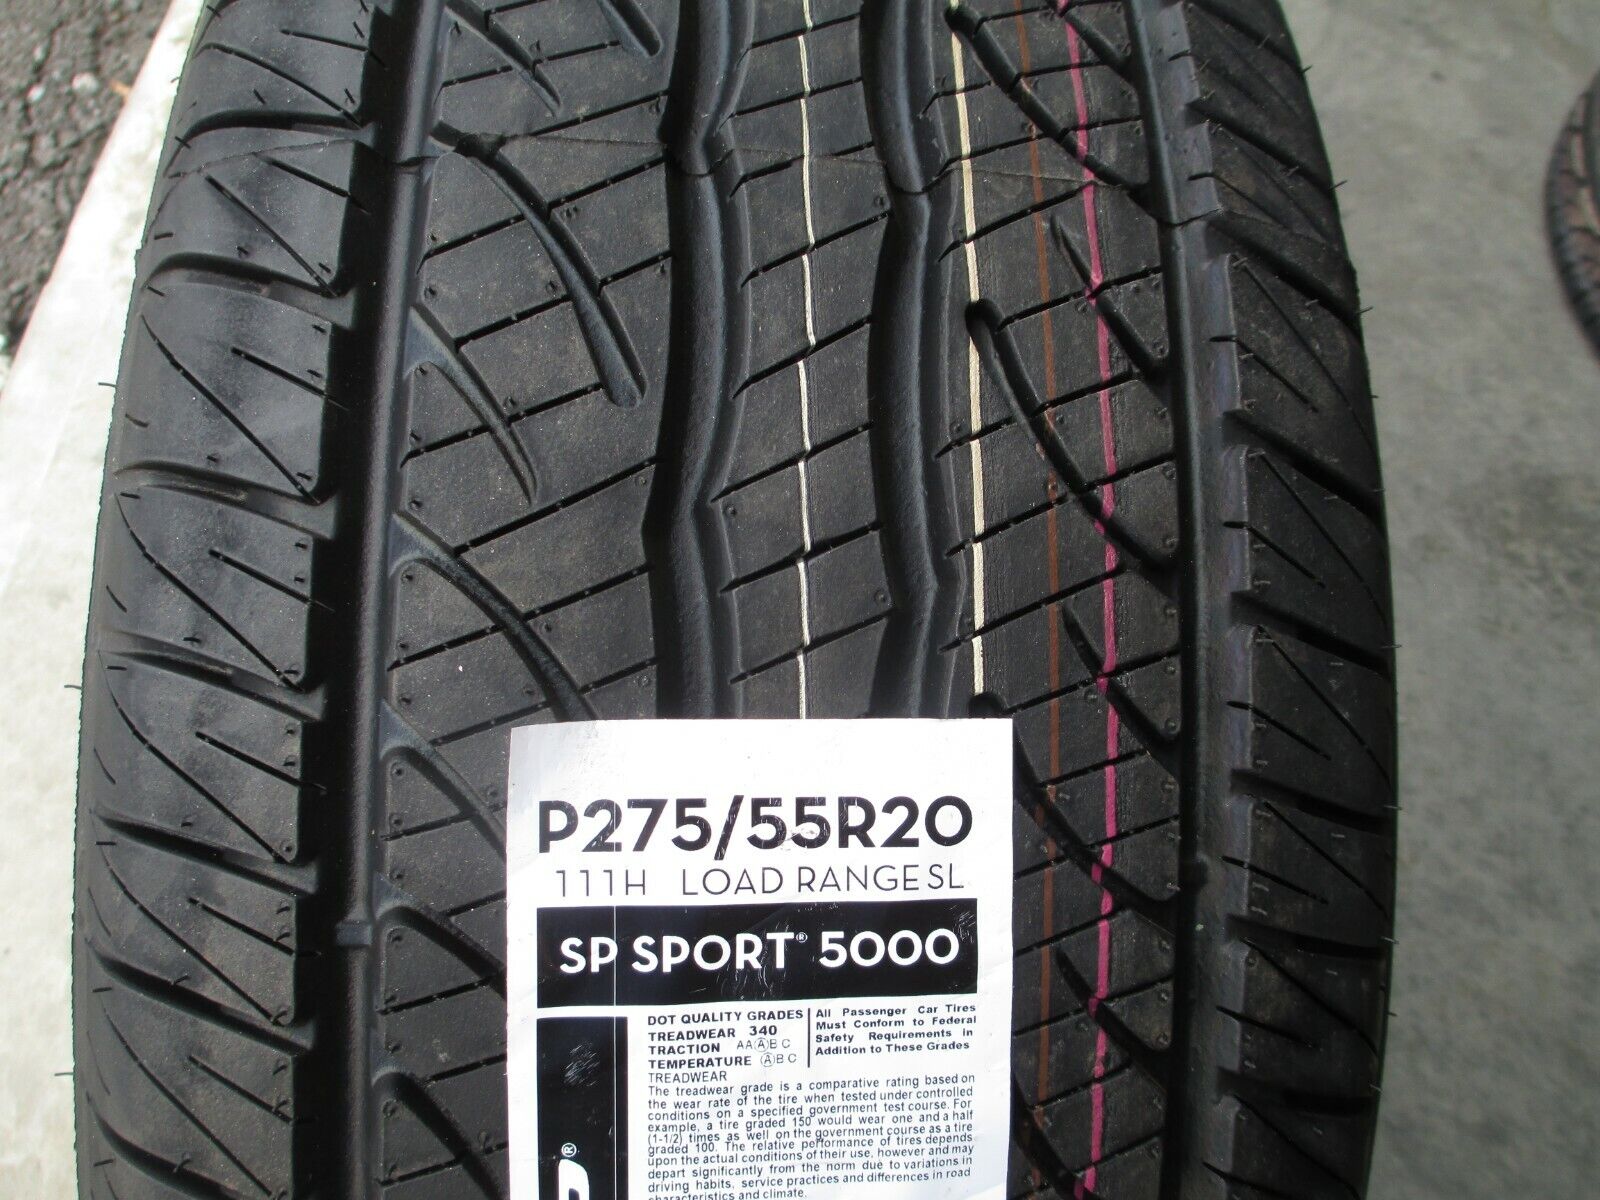 4 New 275/55R20 Dunlop SP Sport 5000 Tires 55 20 R20 2755520 55R BLK All Season